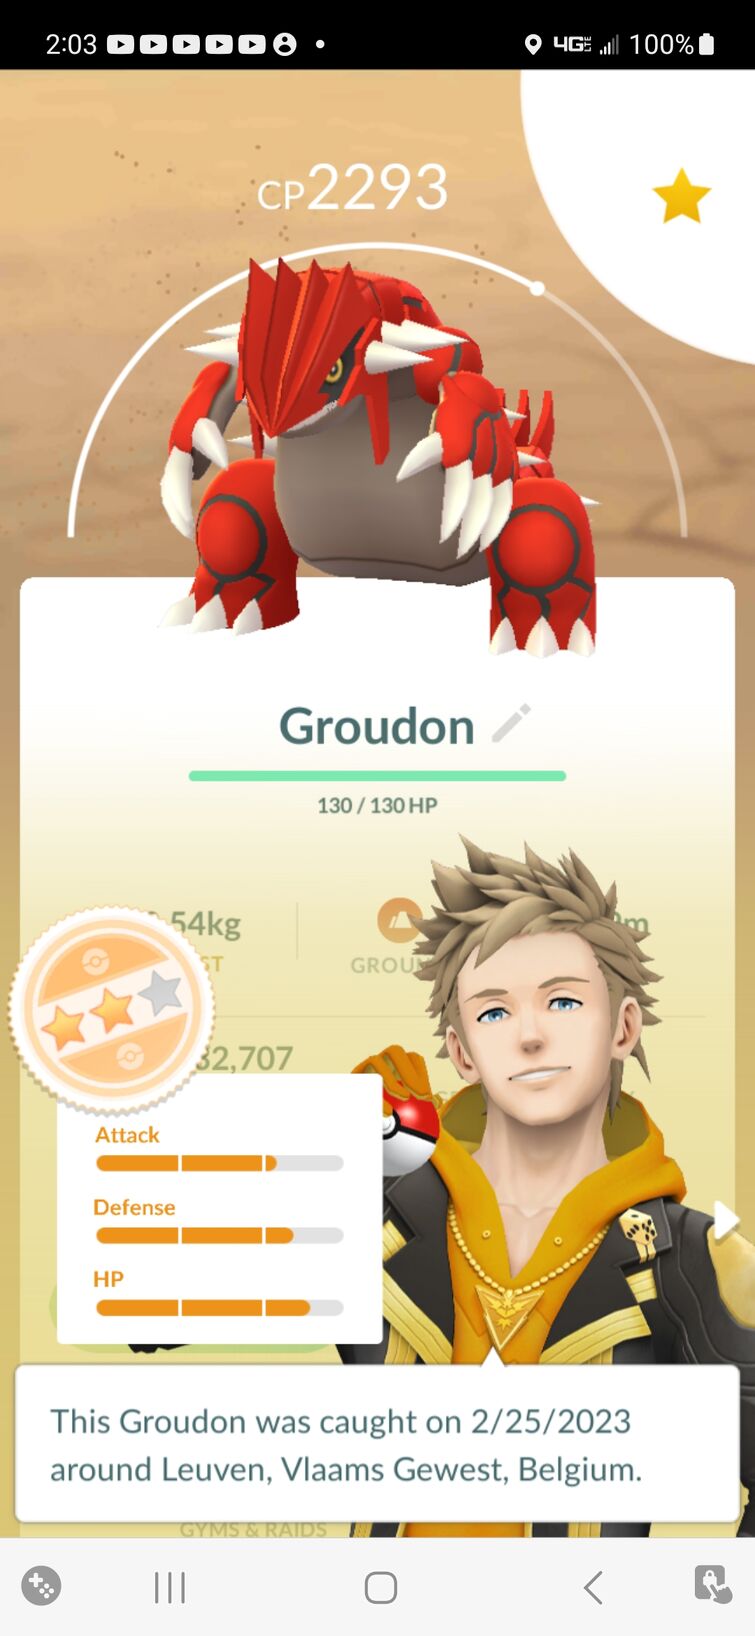 How Will Pokémon GO Handle Primal Groudon & Kyogre?